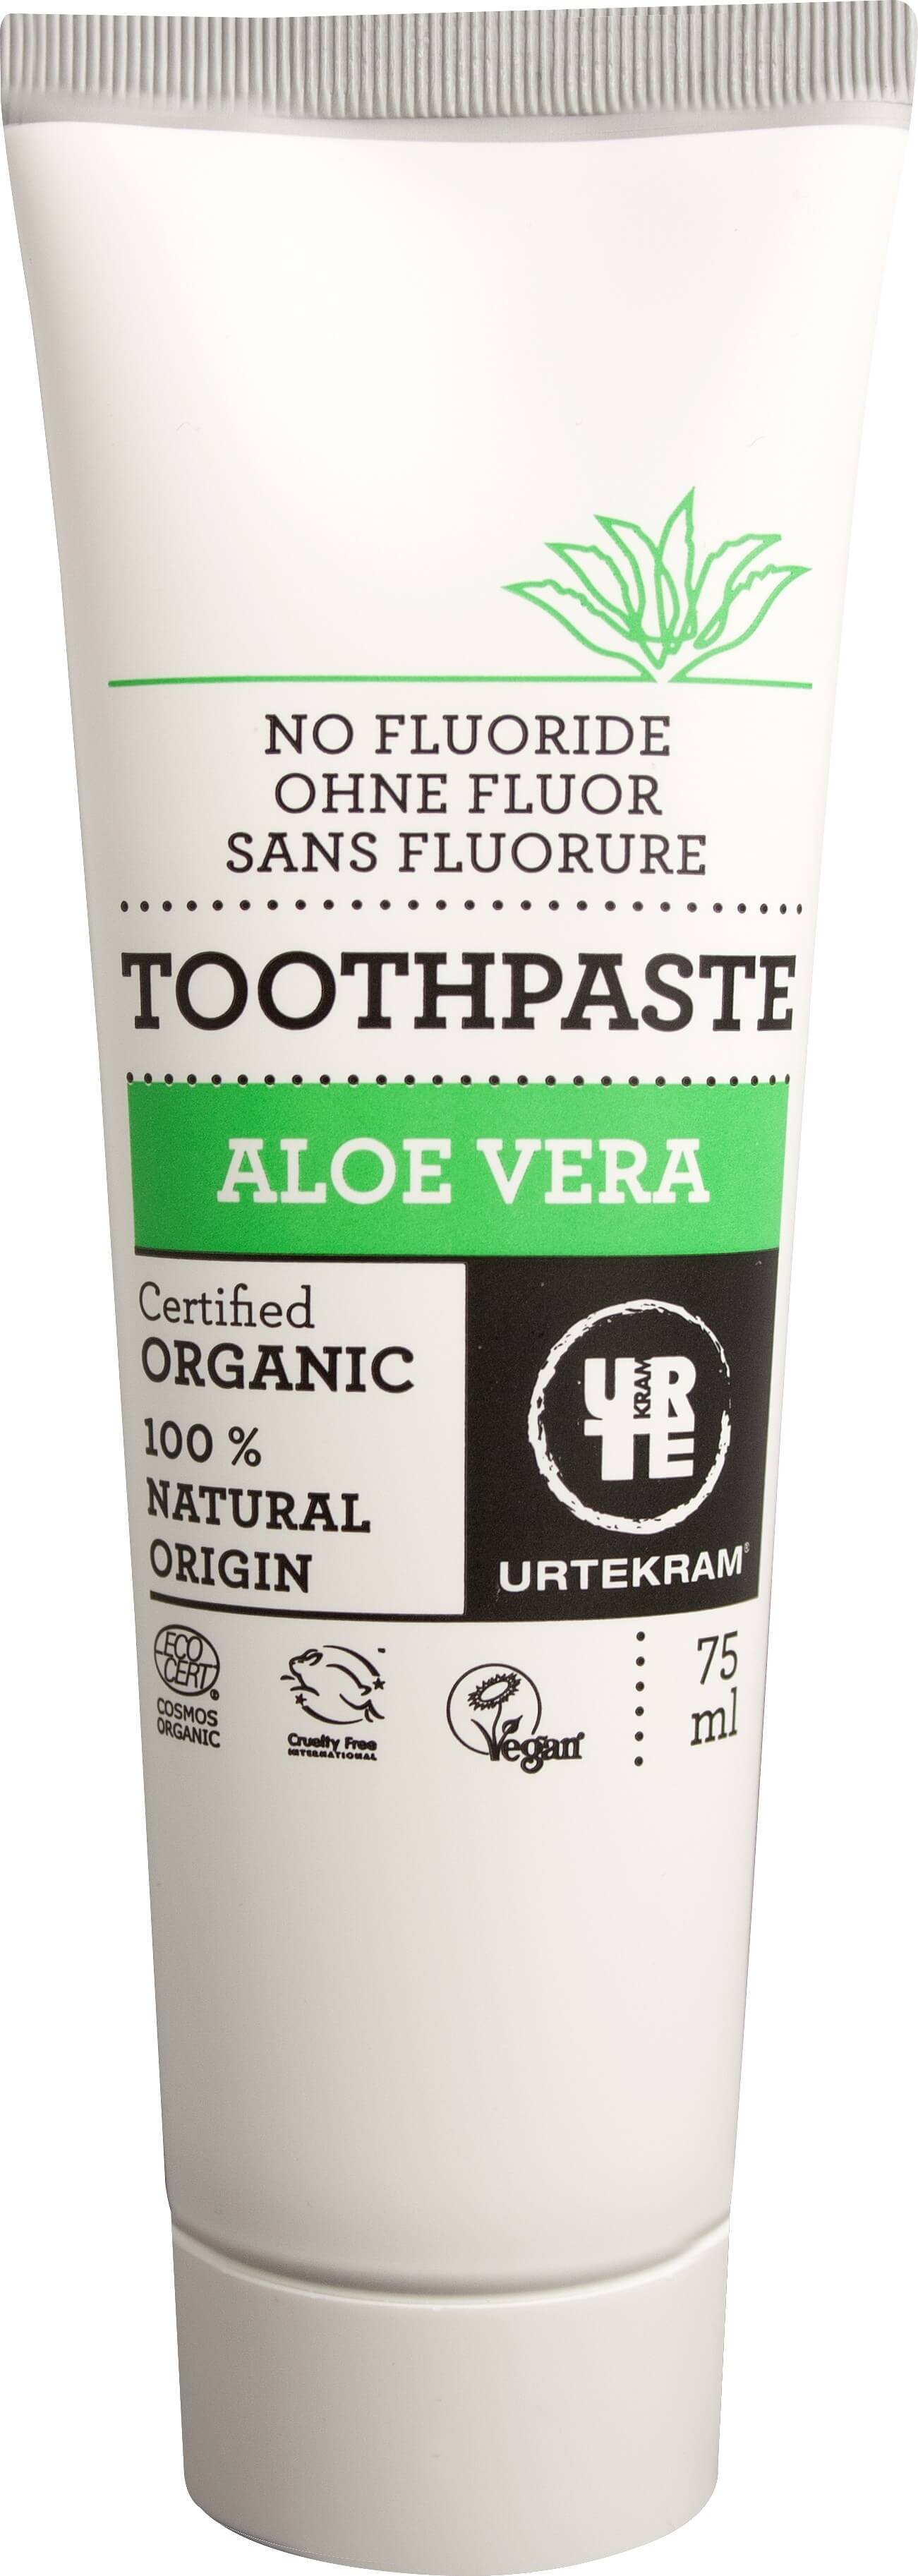 Zobrazit detail výrobku Urtekram Zubní pasta aloe vera 75 ml BIO